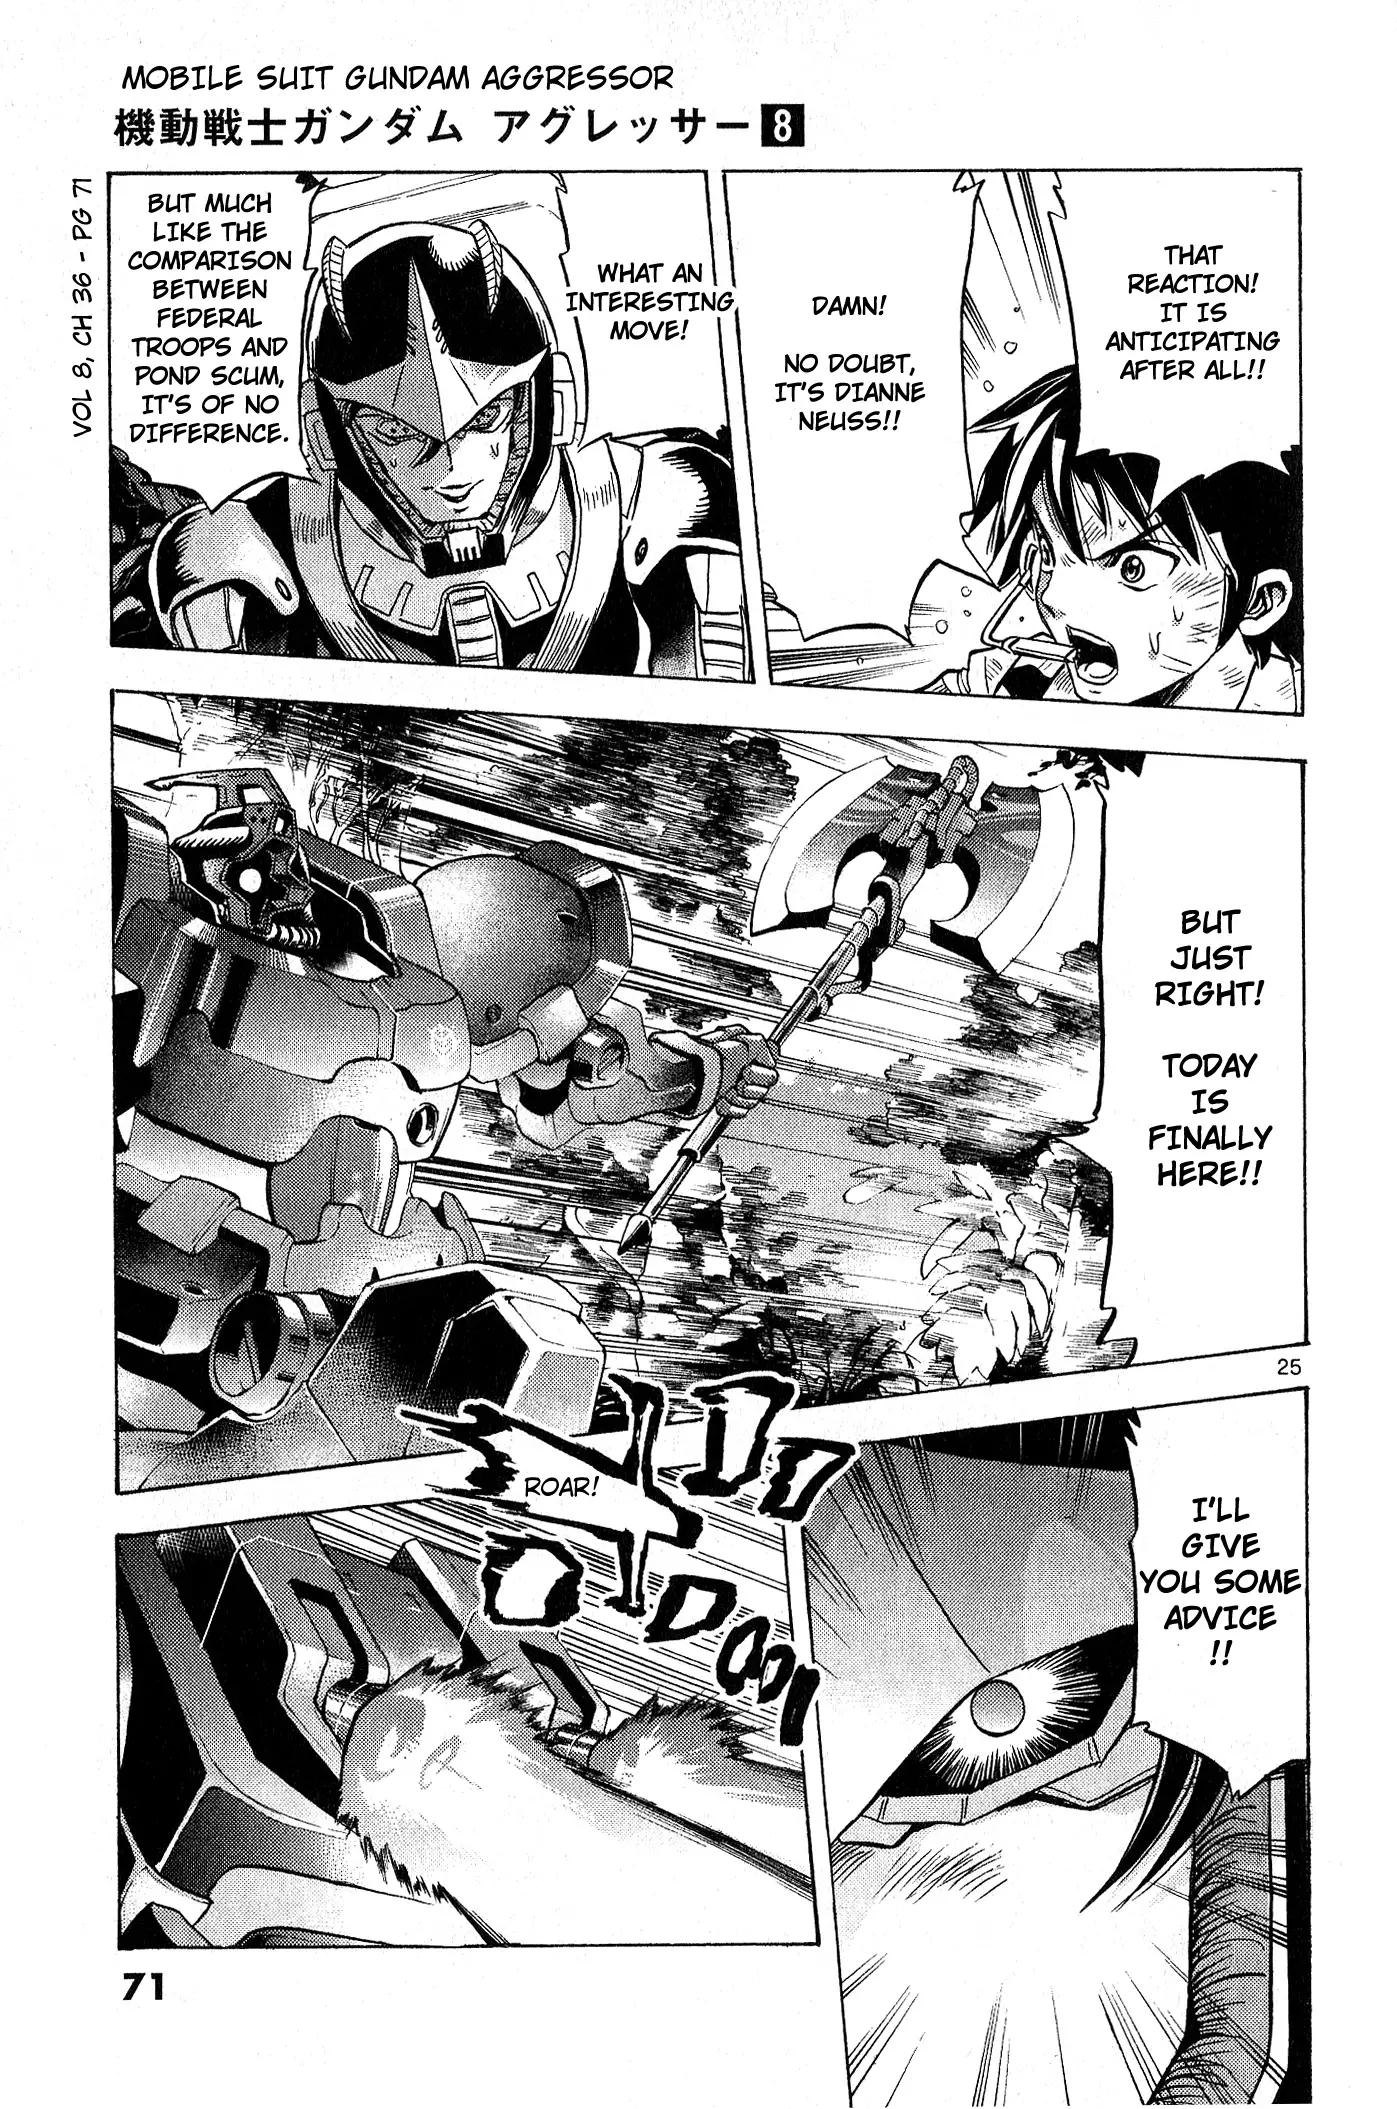 Mobile Suit Gundam Aggressor - 36 page 25-efe9bcaf